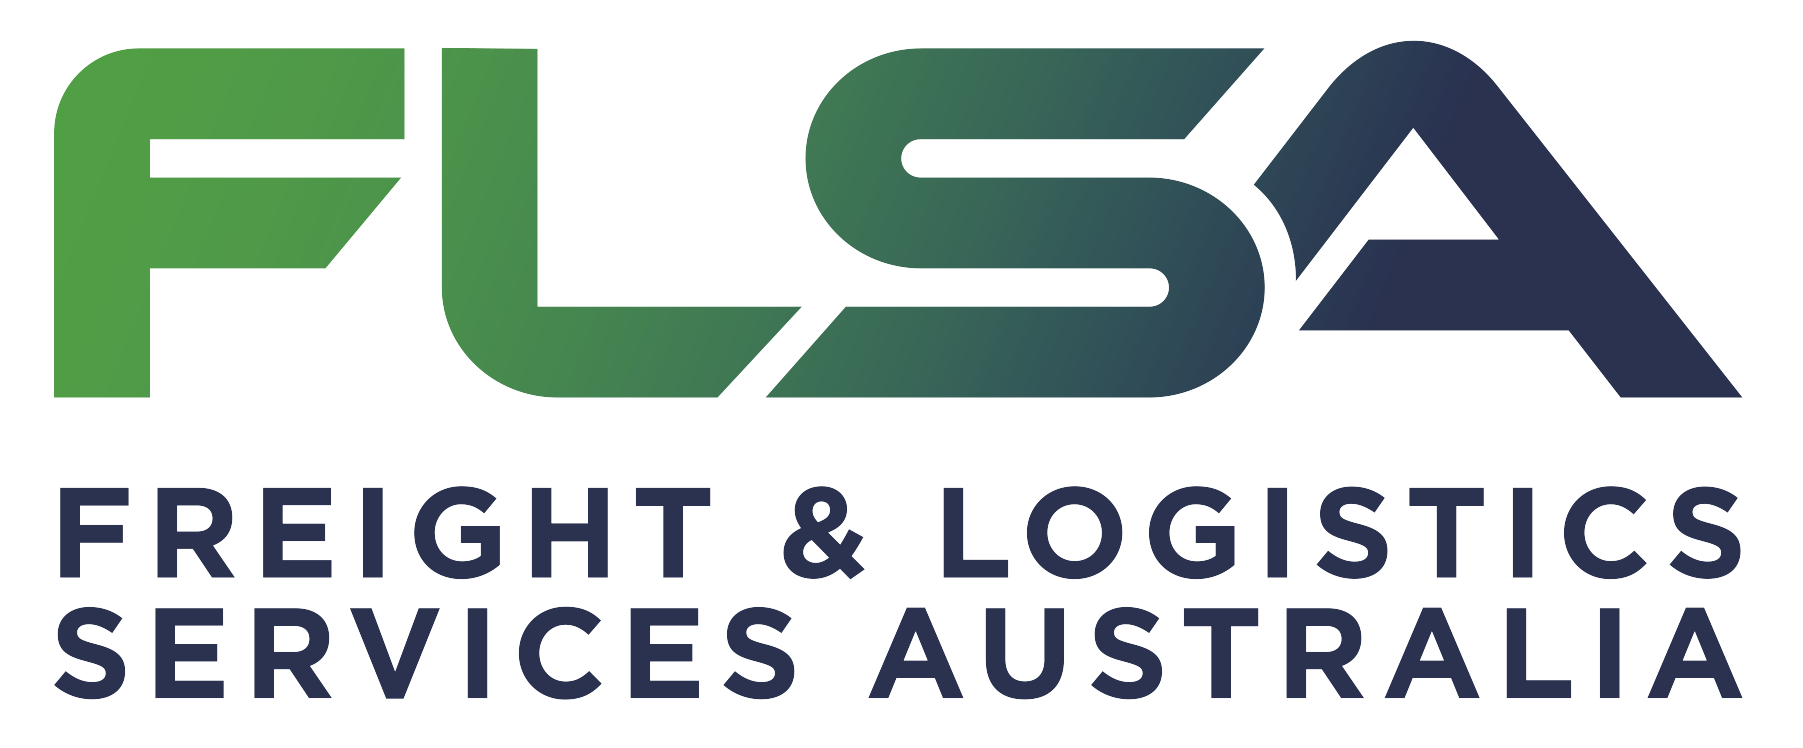 Freight & Logistics Services Australia